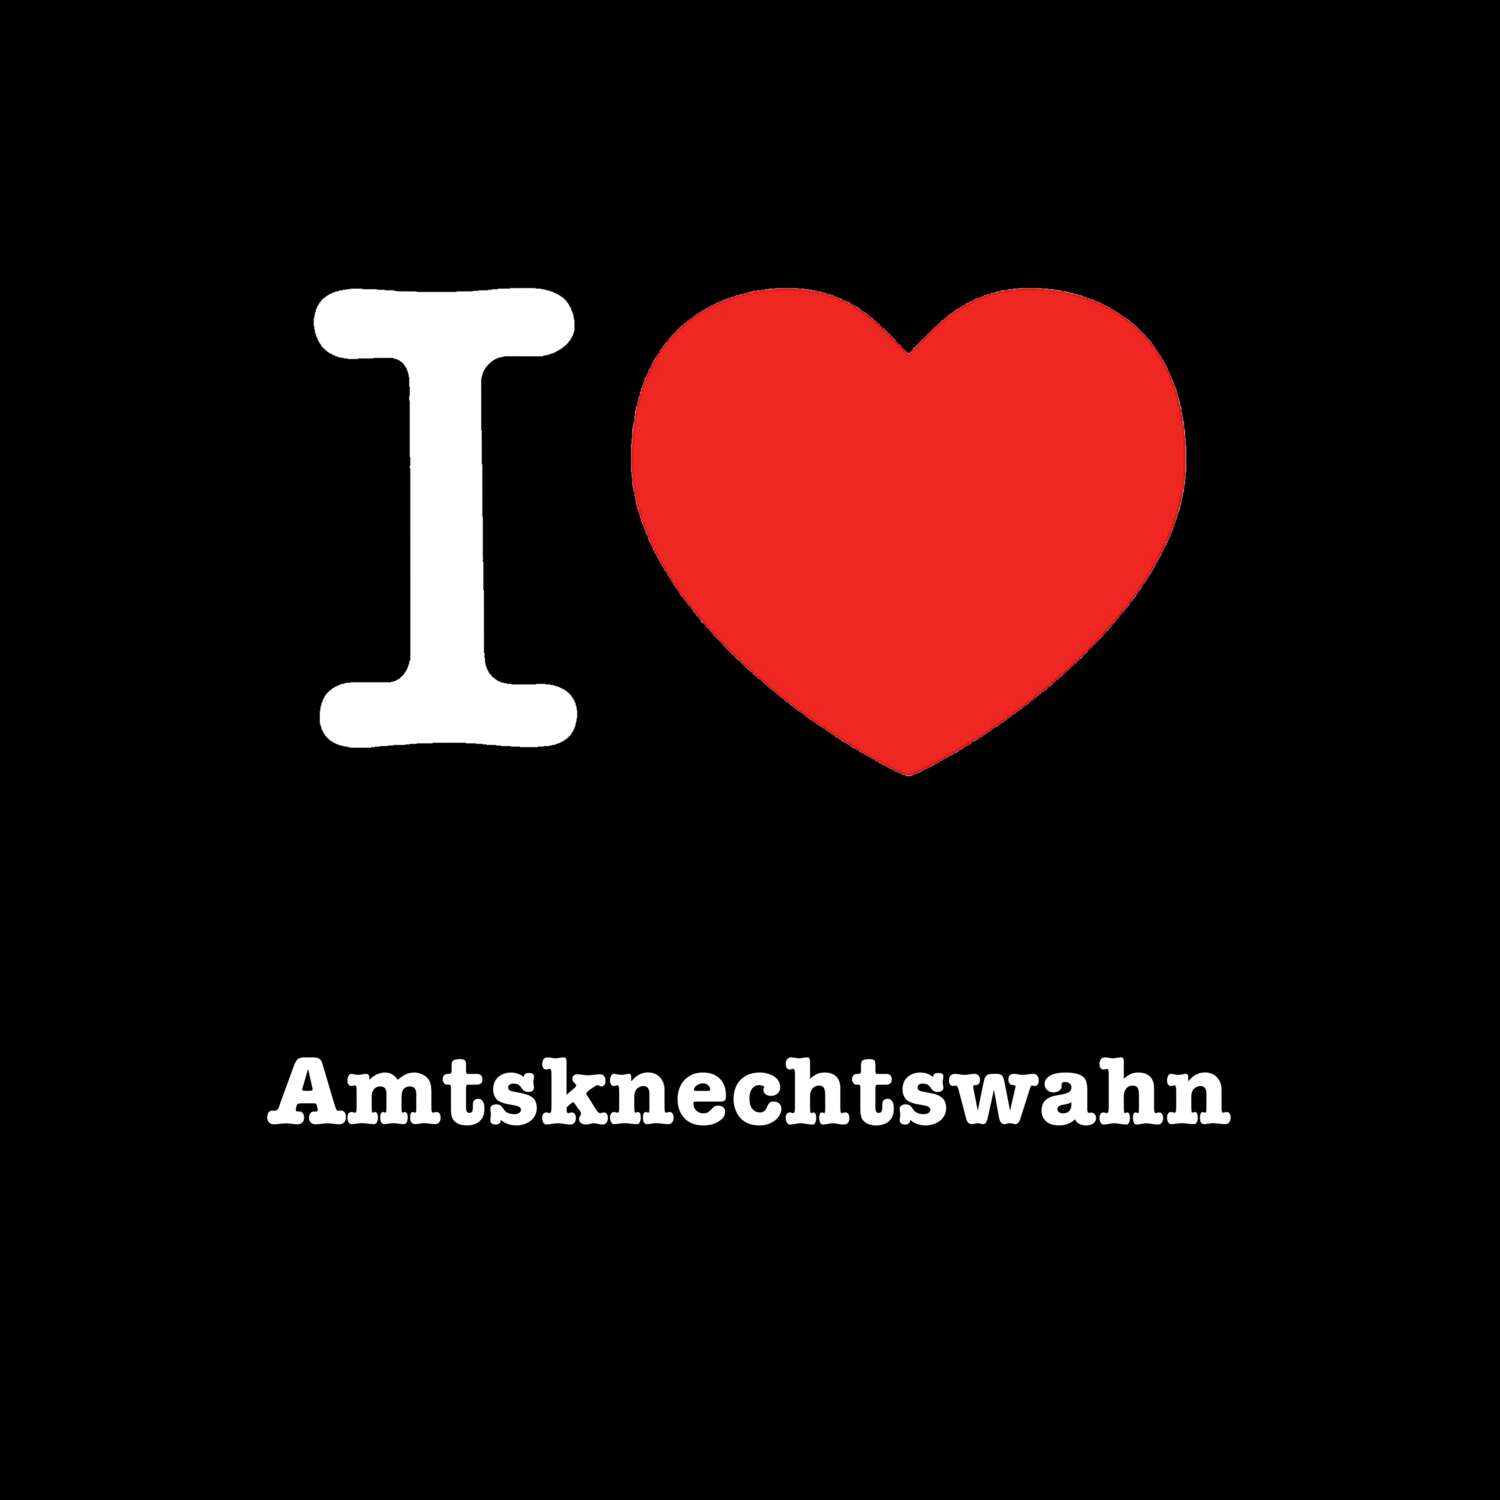 Amtsknechtswahn T-Shirt »I love«